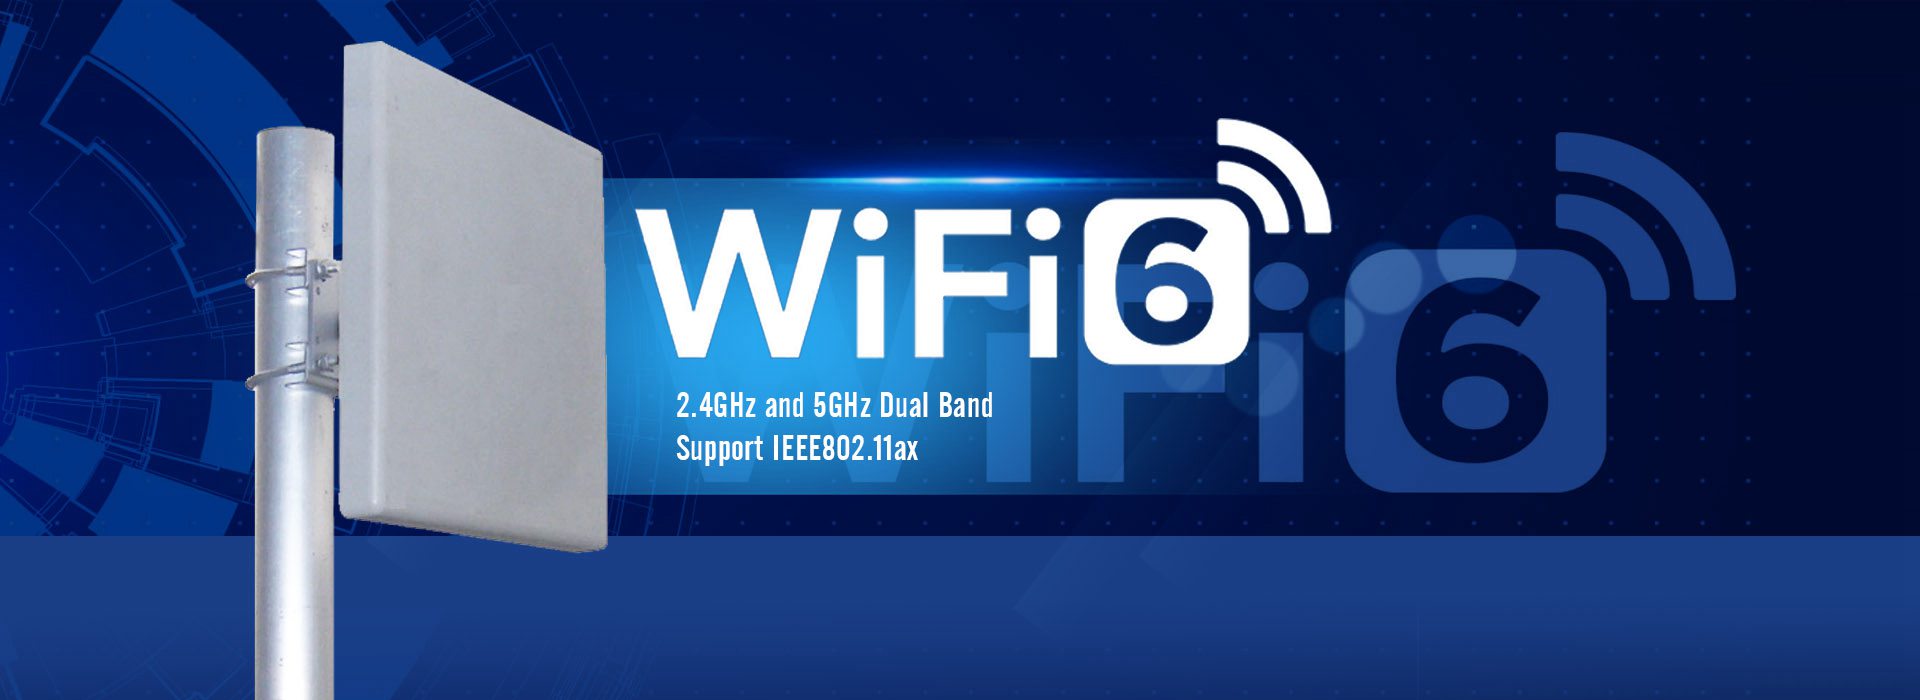 antena wi-fi6